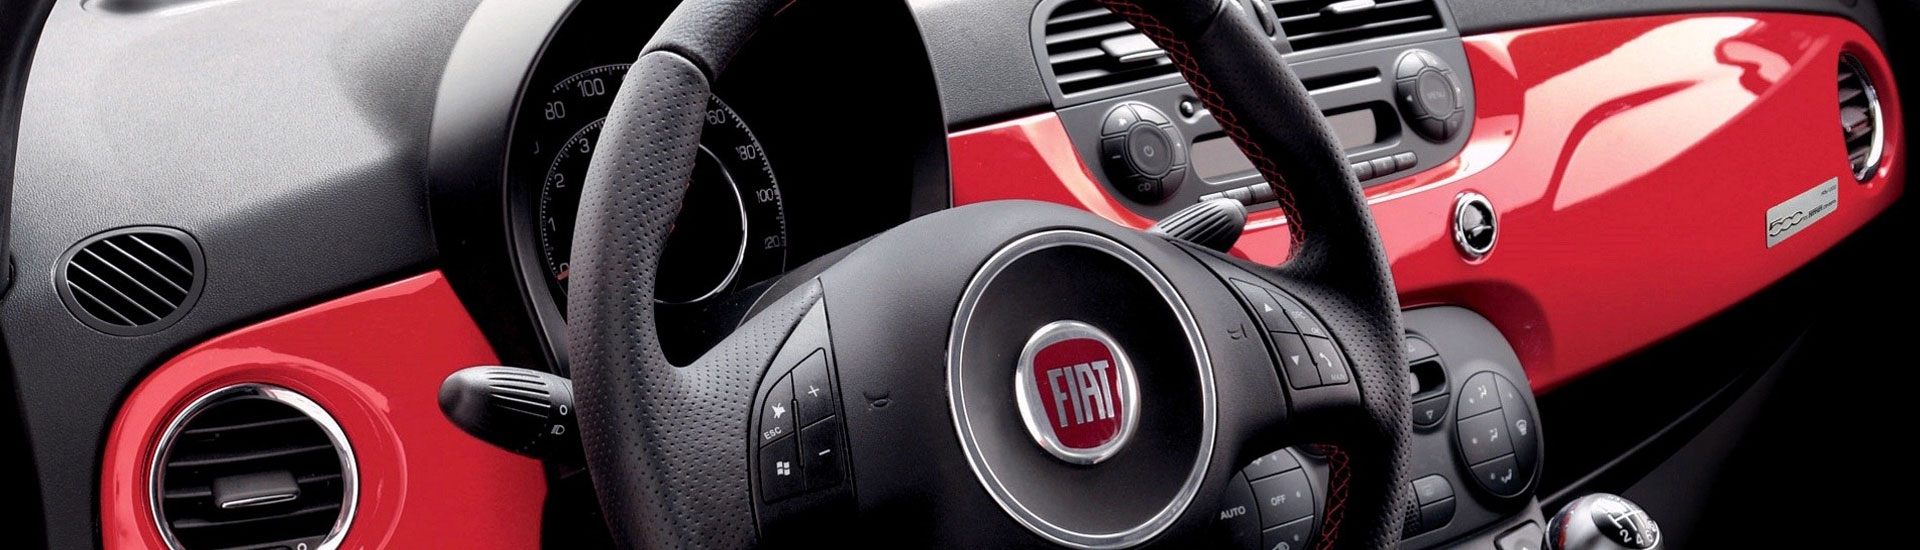 2014 Fiat 500 Abarth Custom Dash Kits